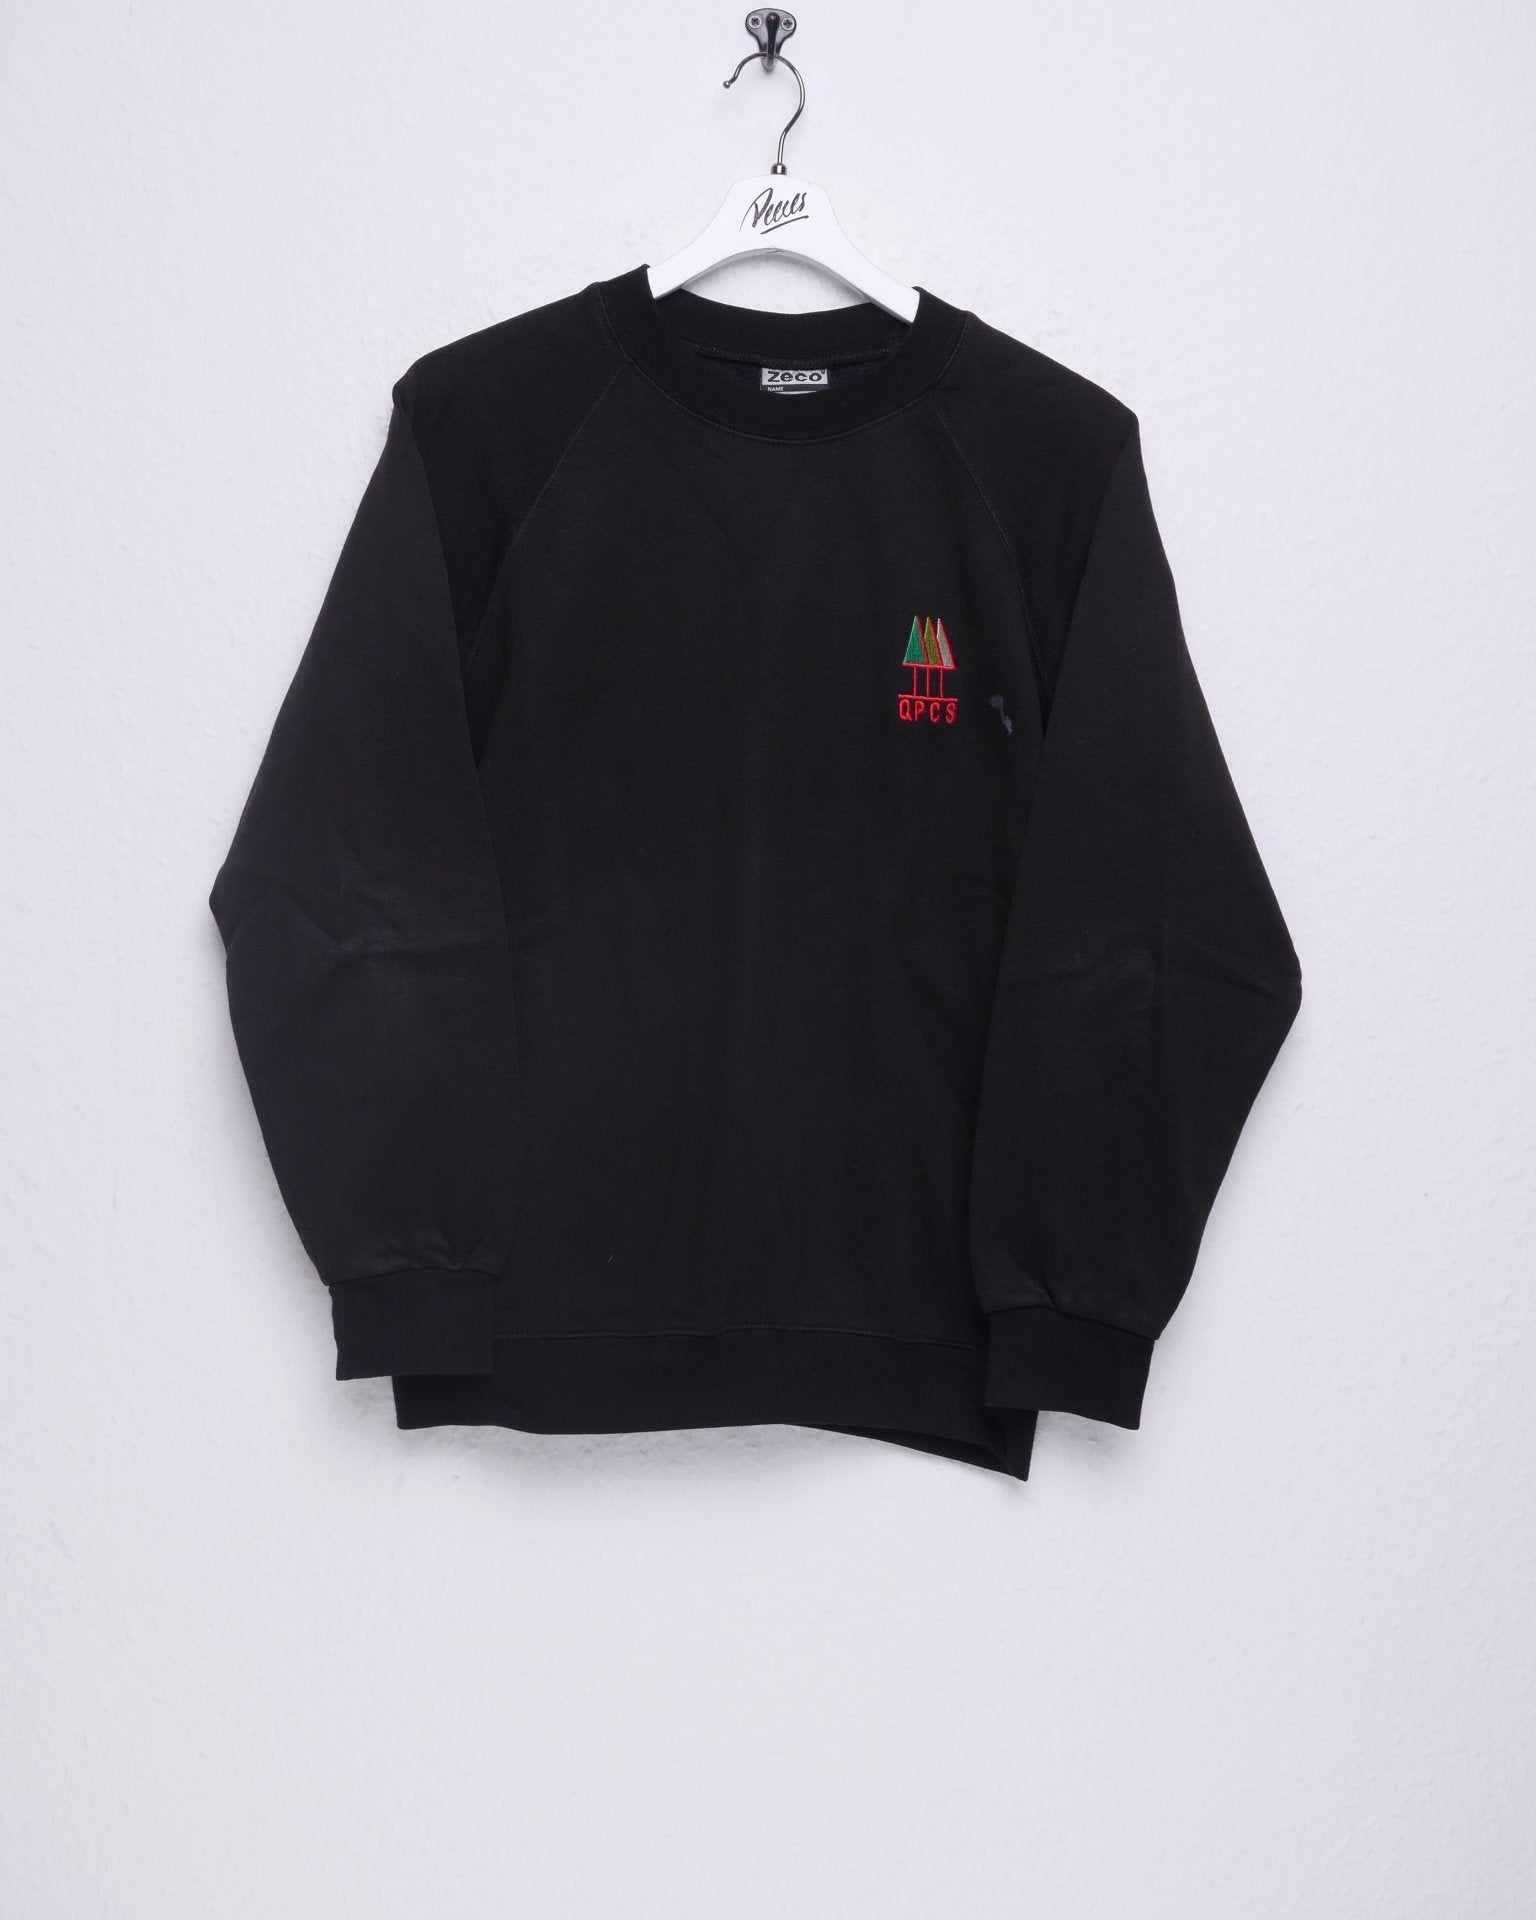 QPCS embroidered Logo black Sweater - Peeces